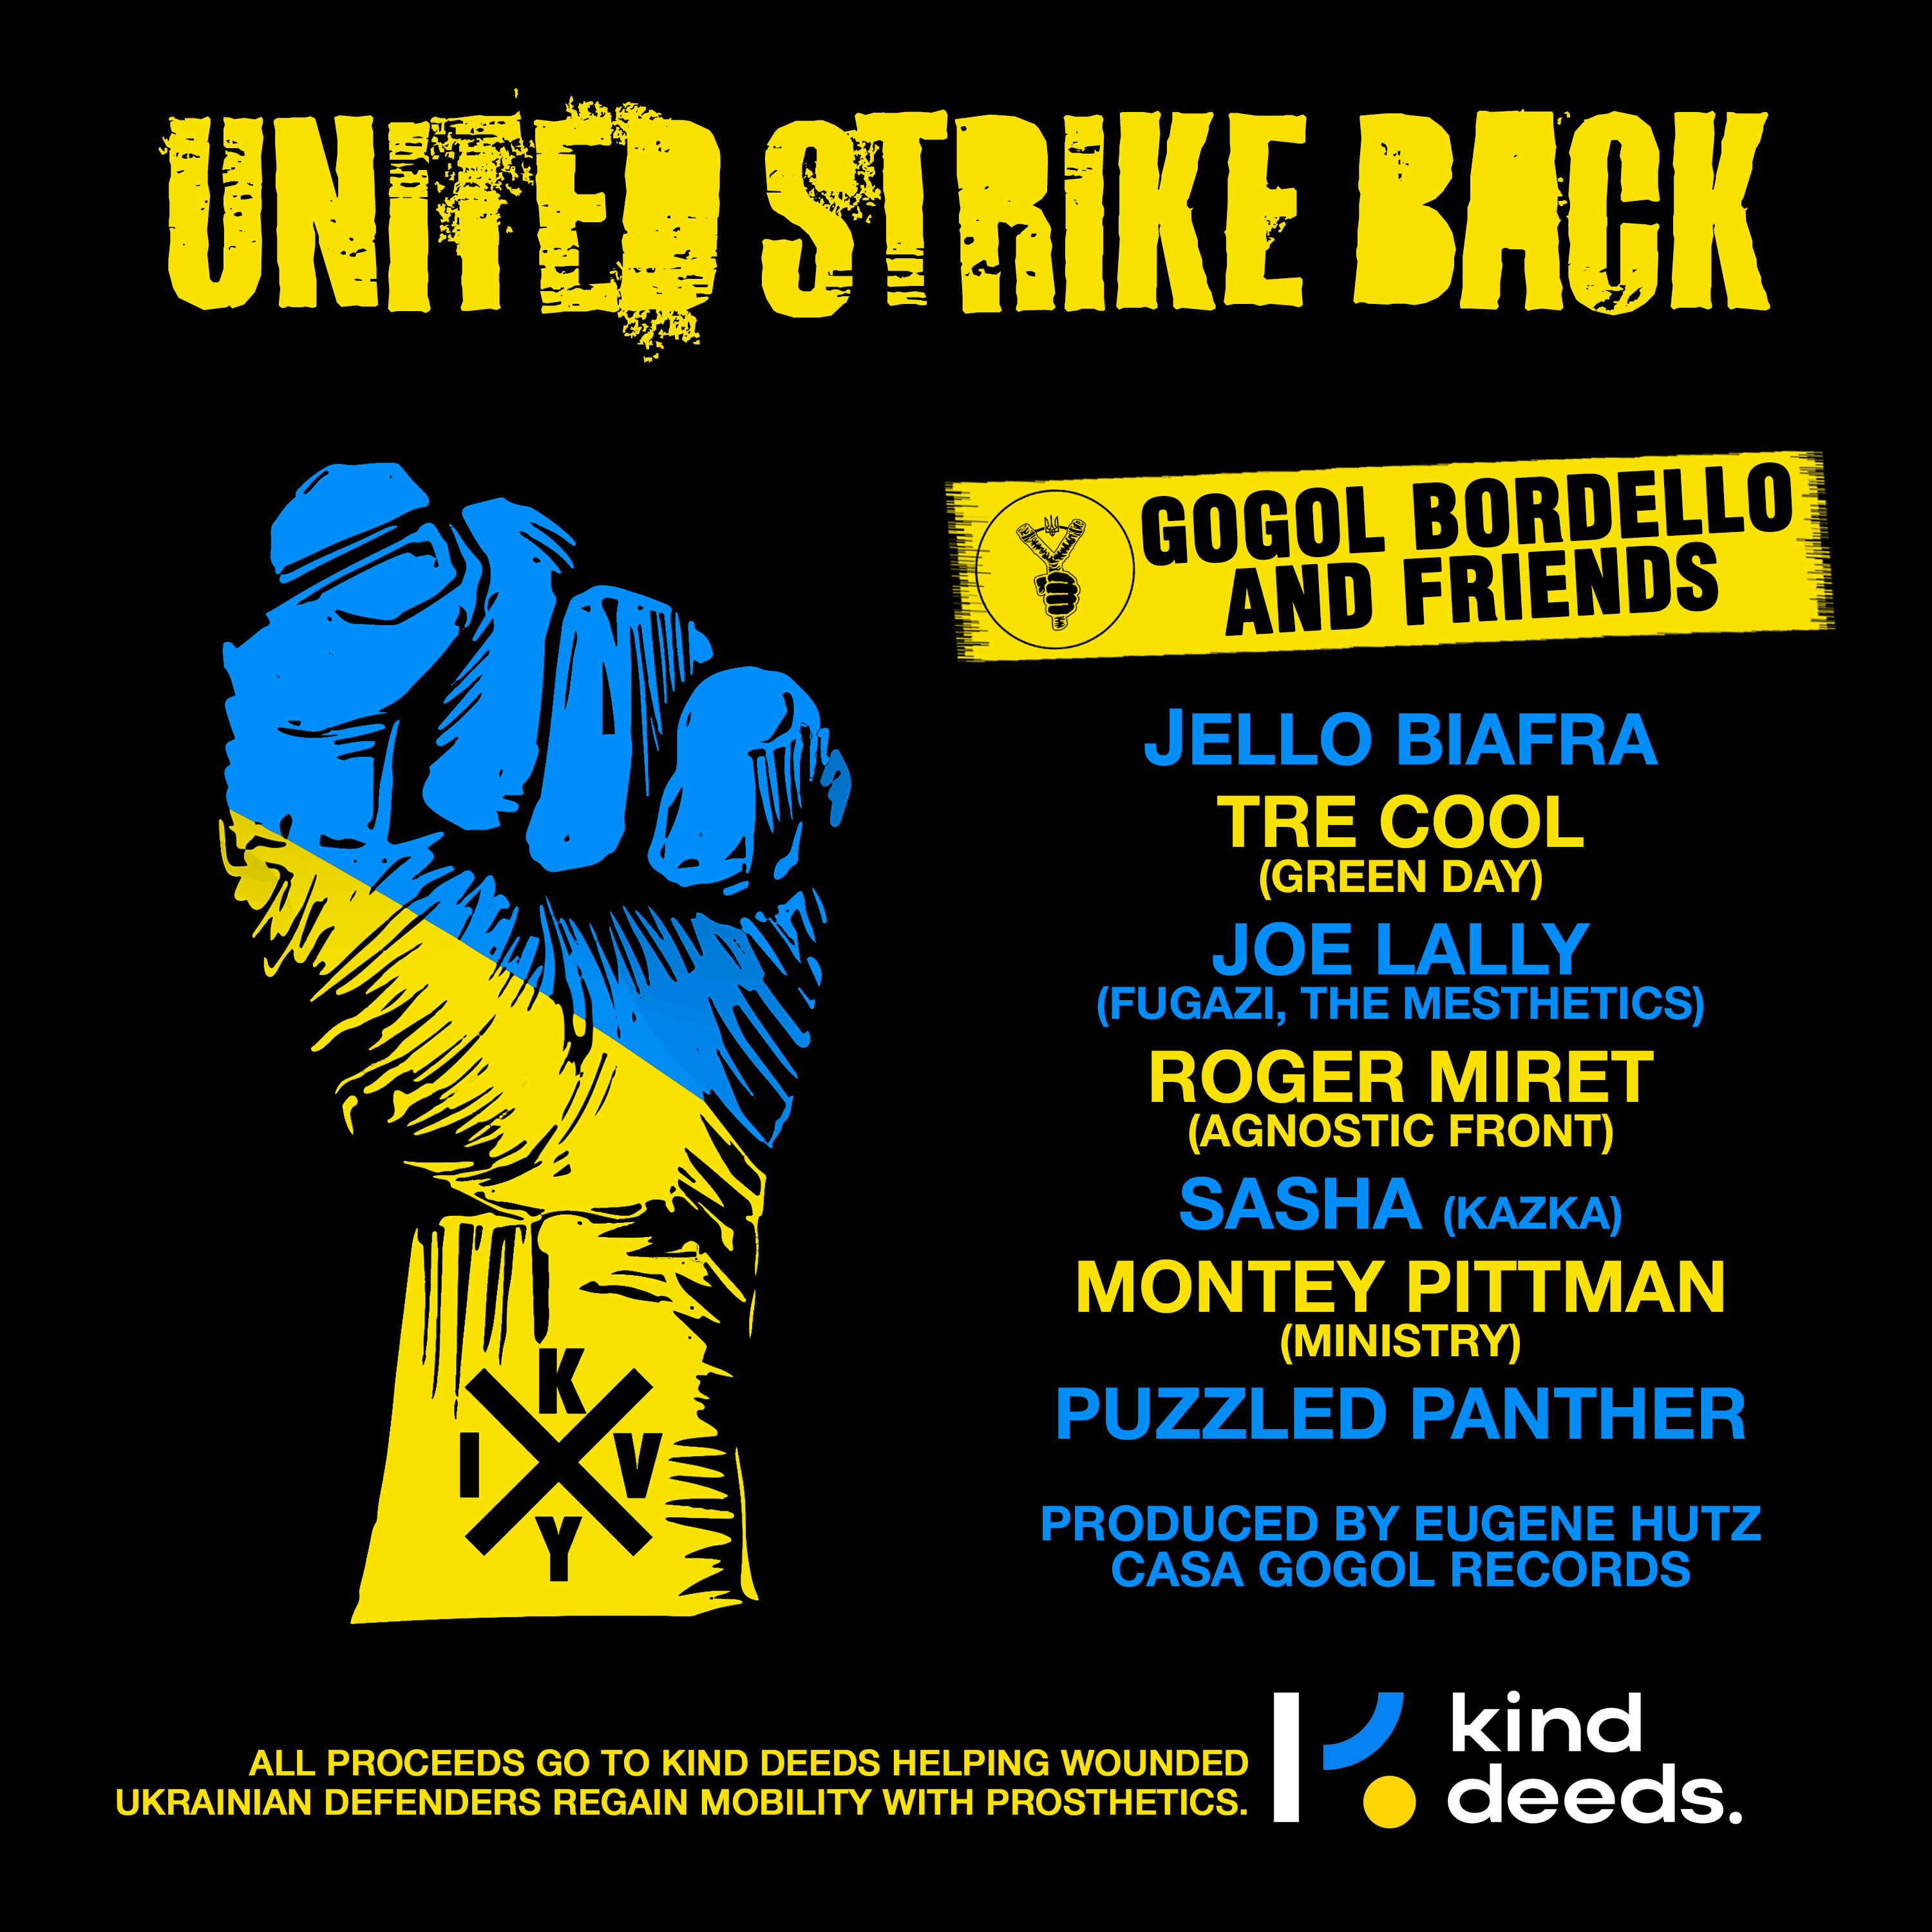 Gogol Bordello & Friends Release “United Strike Back” Collaborative Charity Song For Ukrainian Soldiers